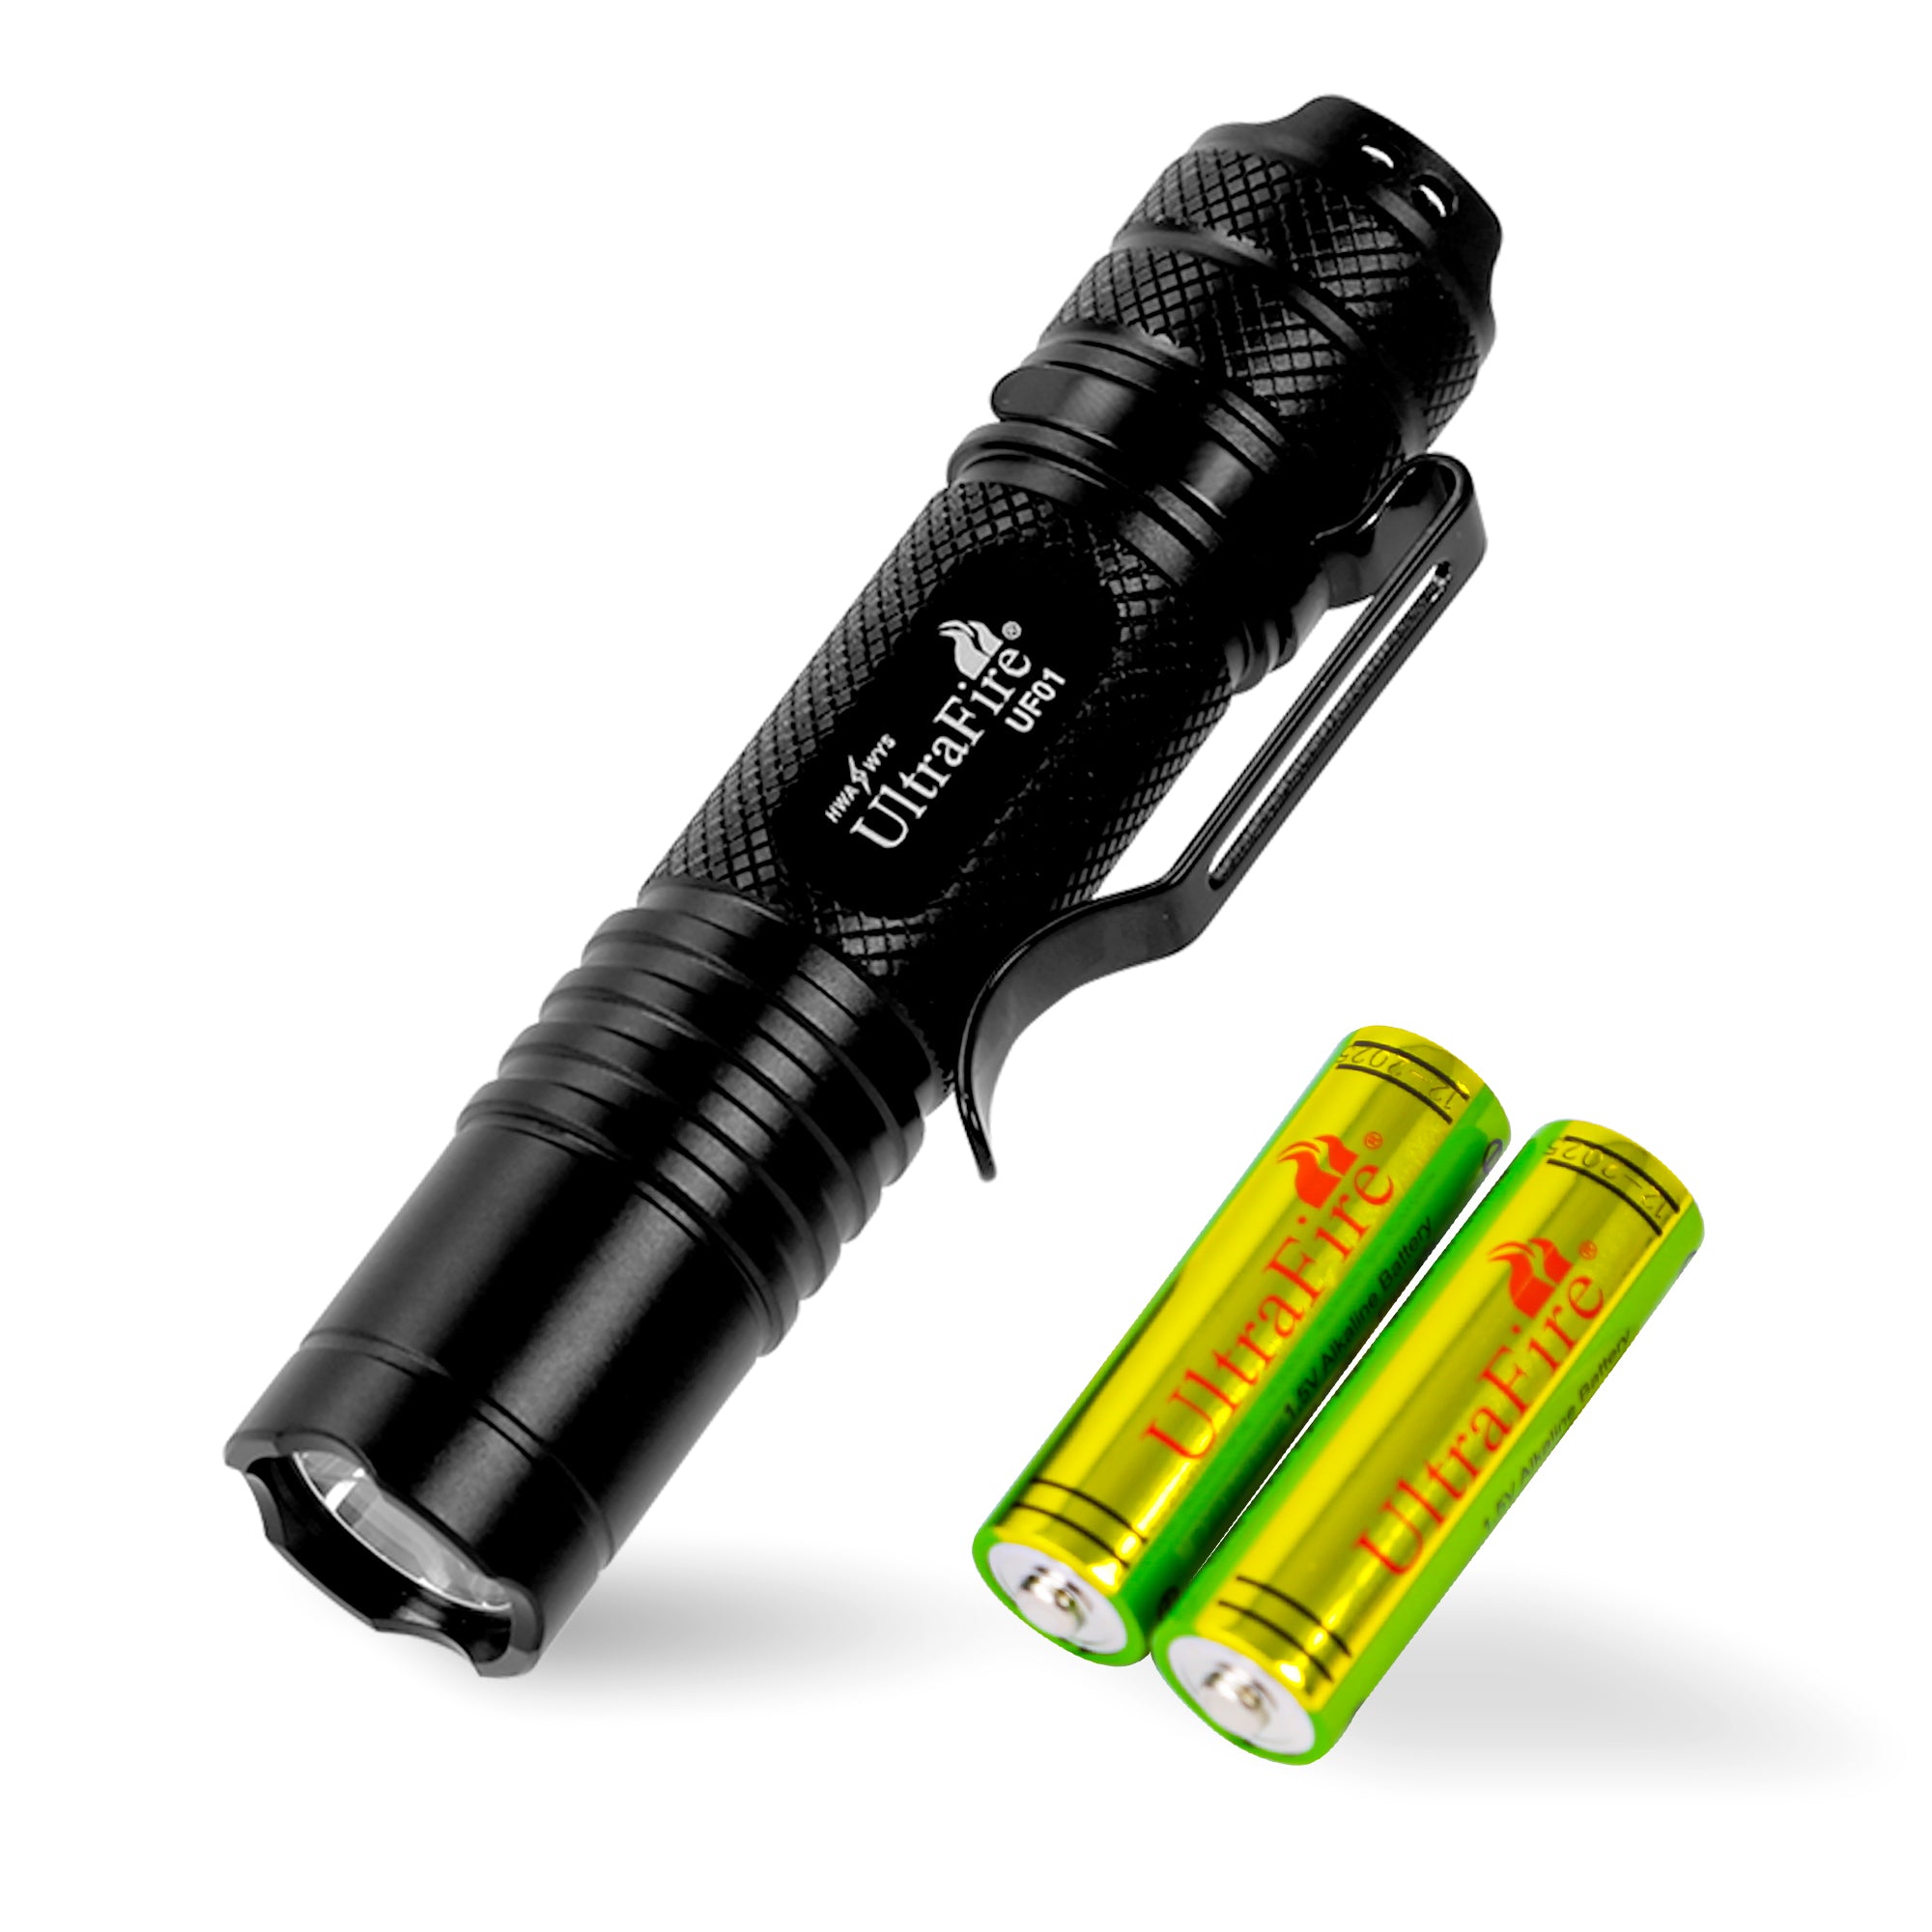 UltraFire Mini Flashlight UF01 3-mode tactical LED Flashlight, super bright 300 lumens torch